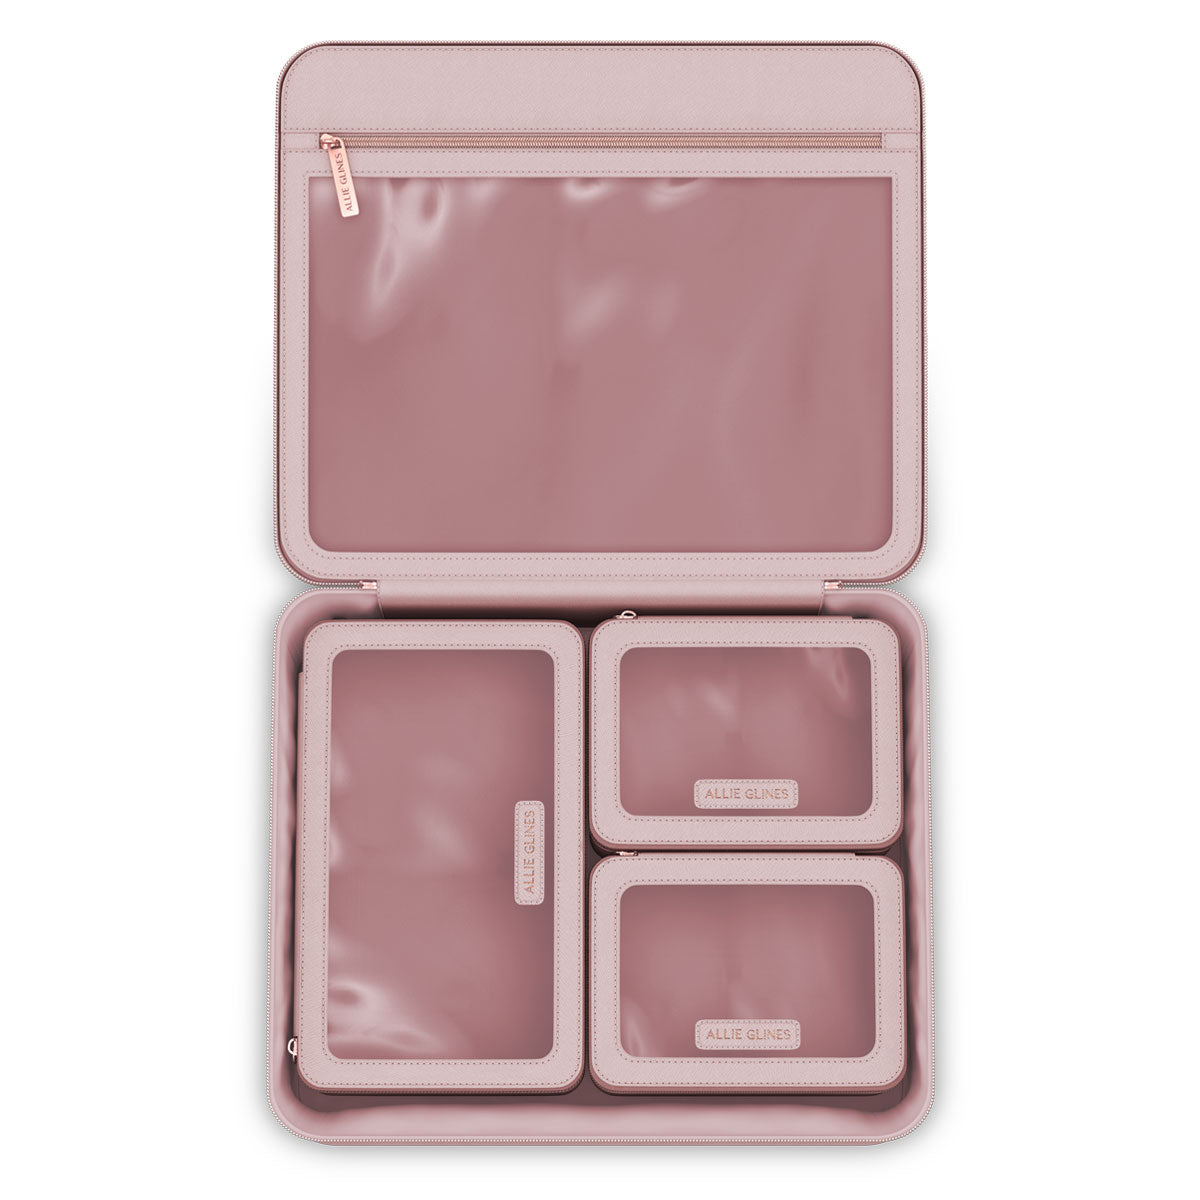 Pink Allie Glines Full Bag Collection